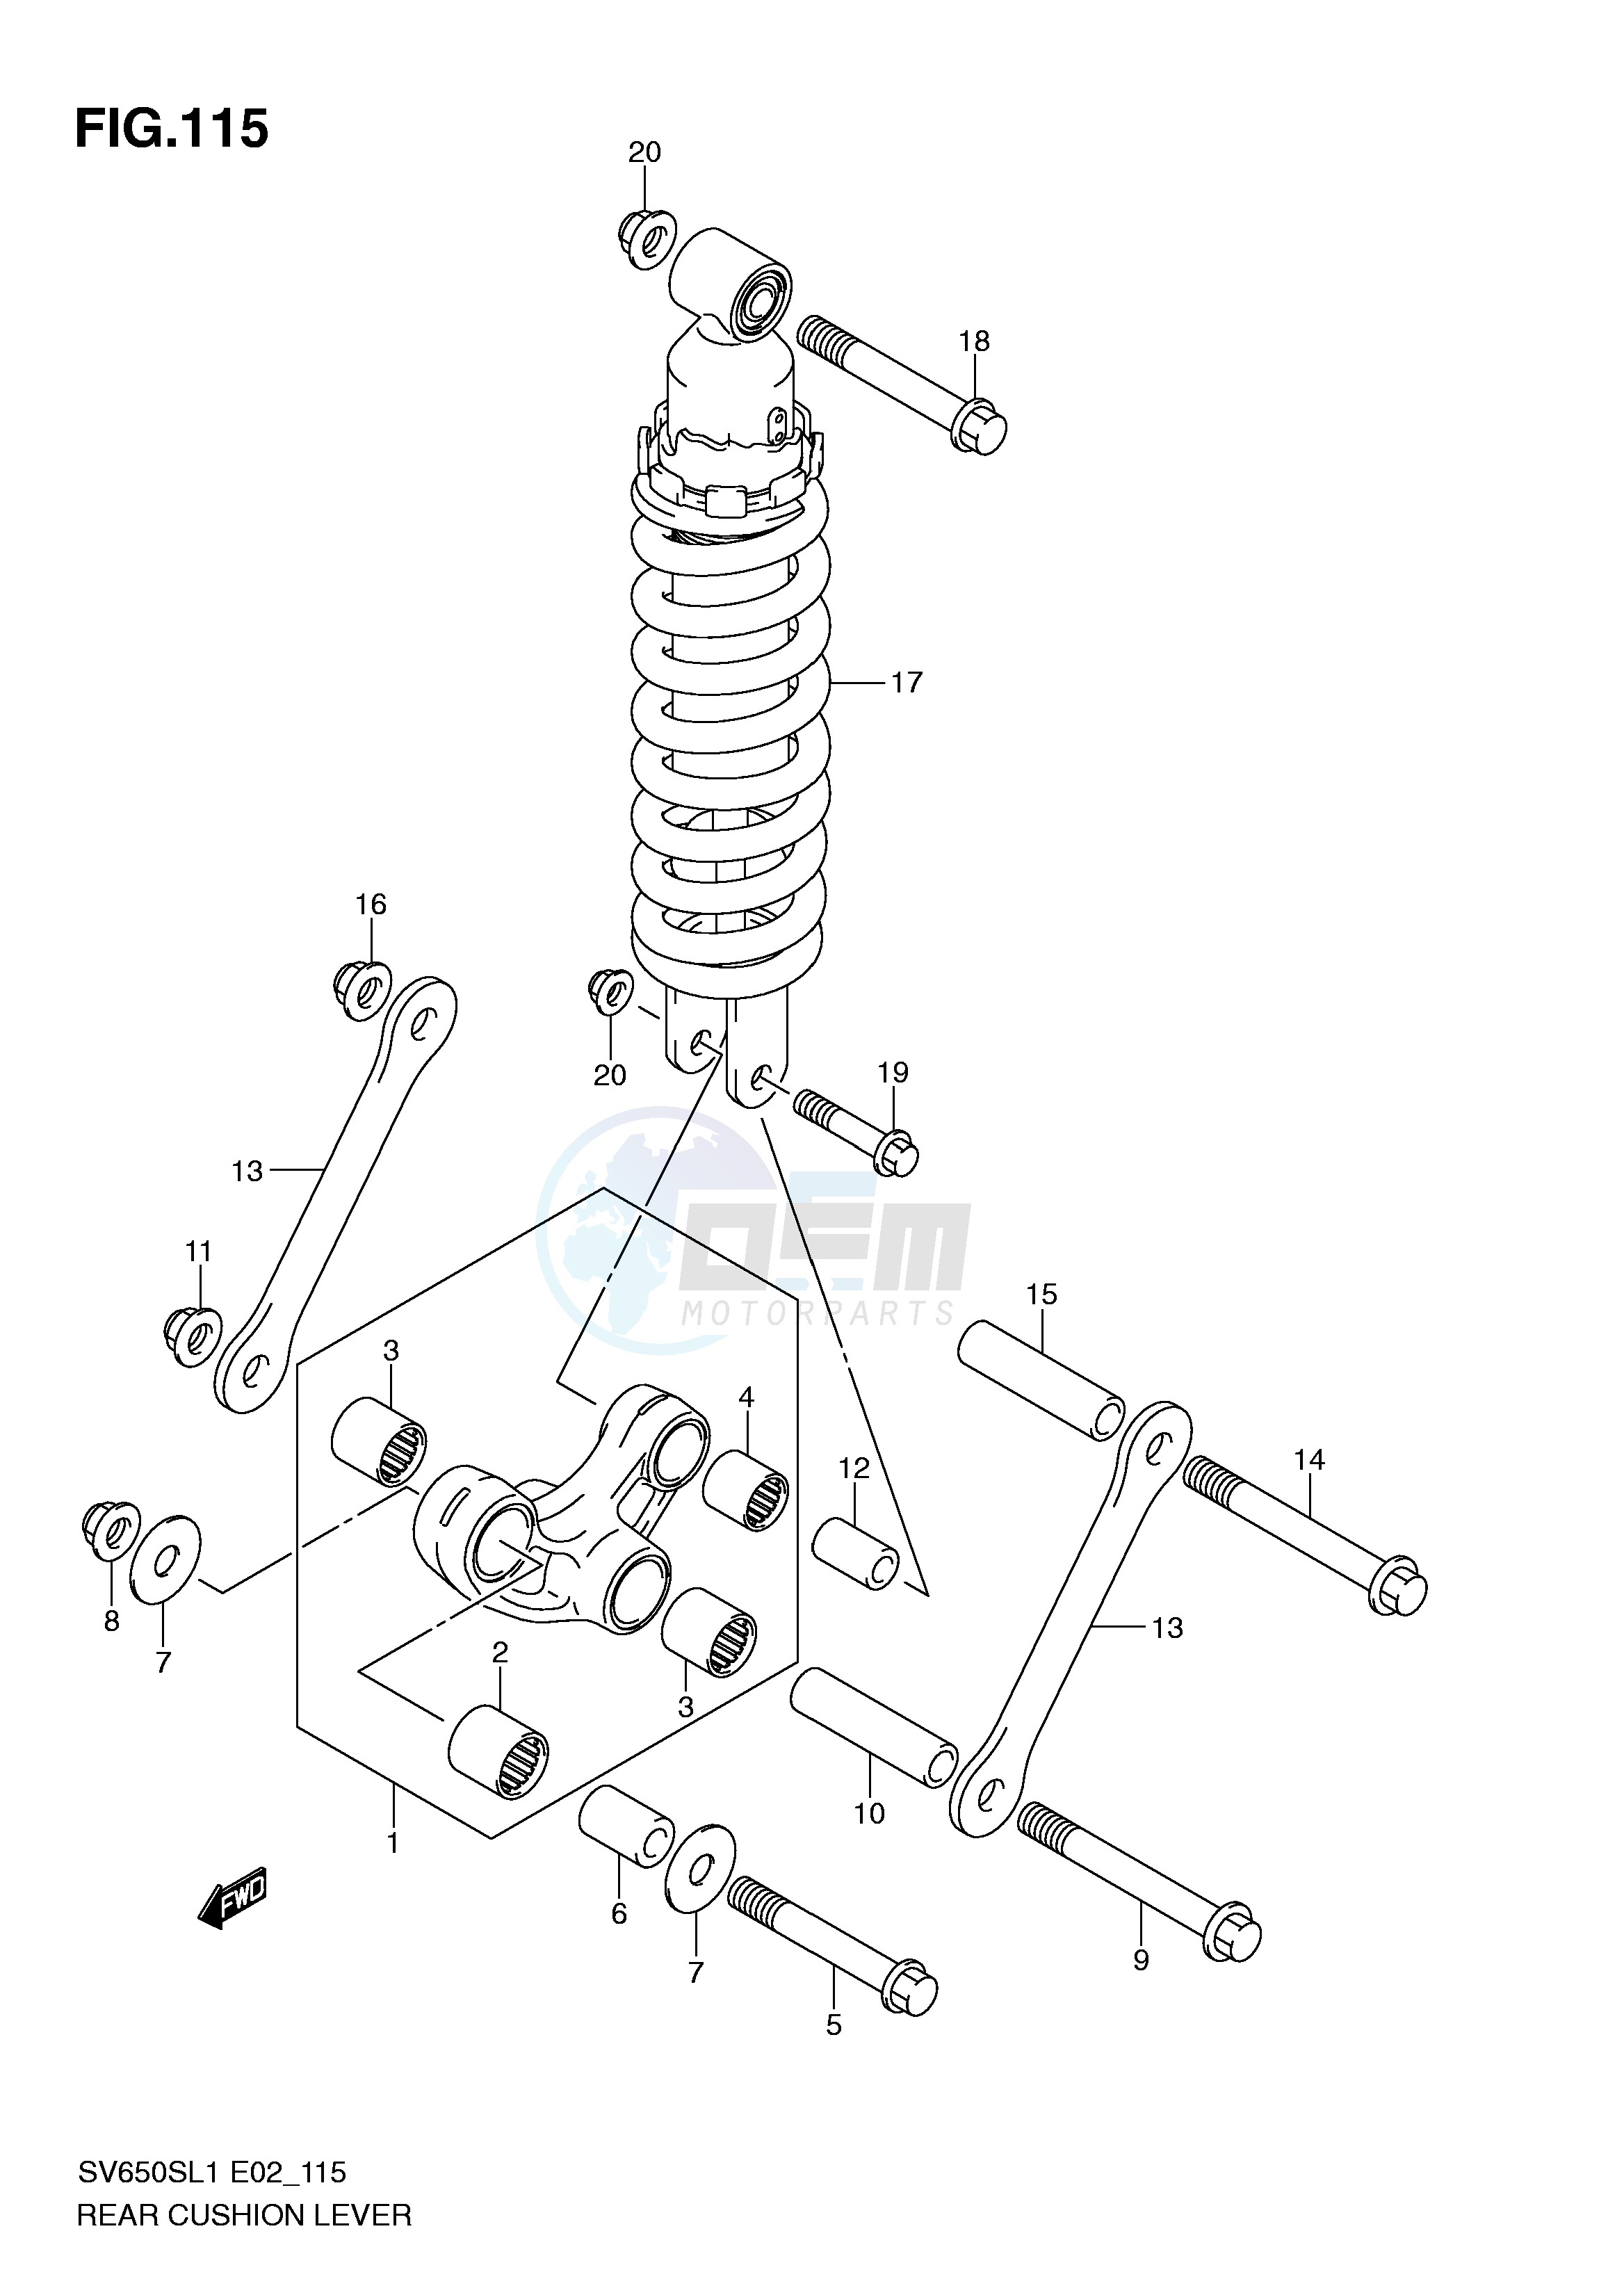 REAR CUSHION LEVER (SV650SL1 E24) blueprint